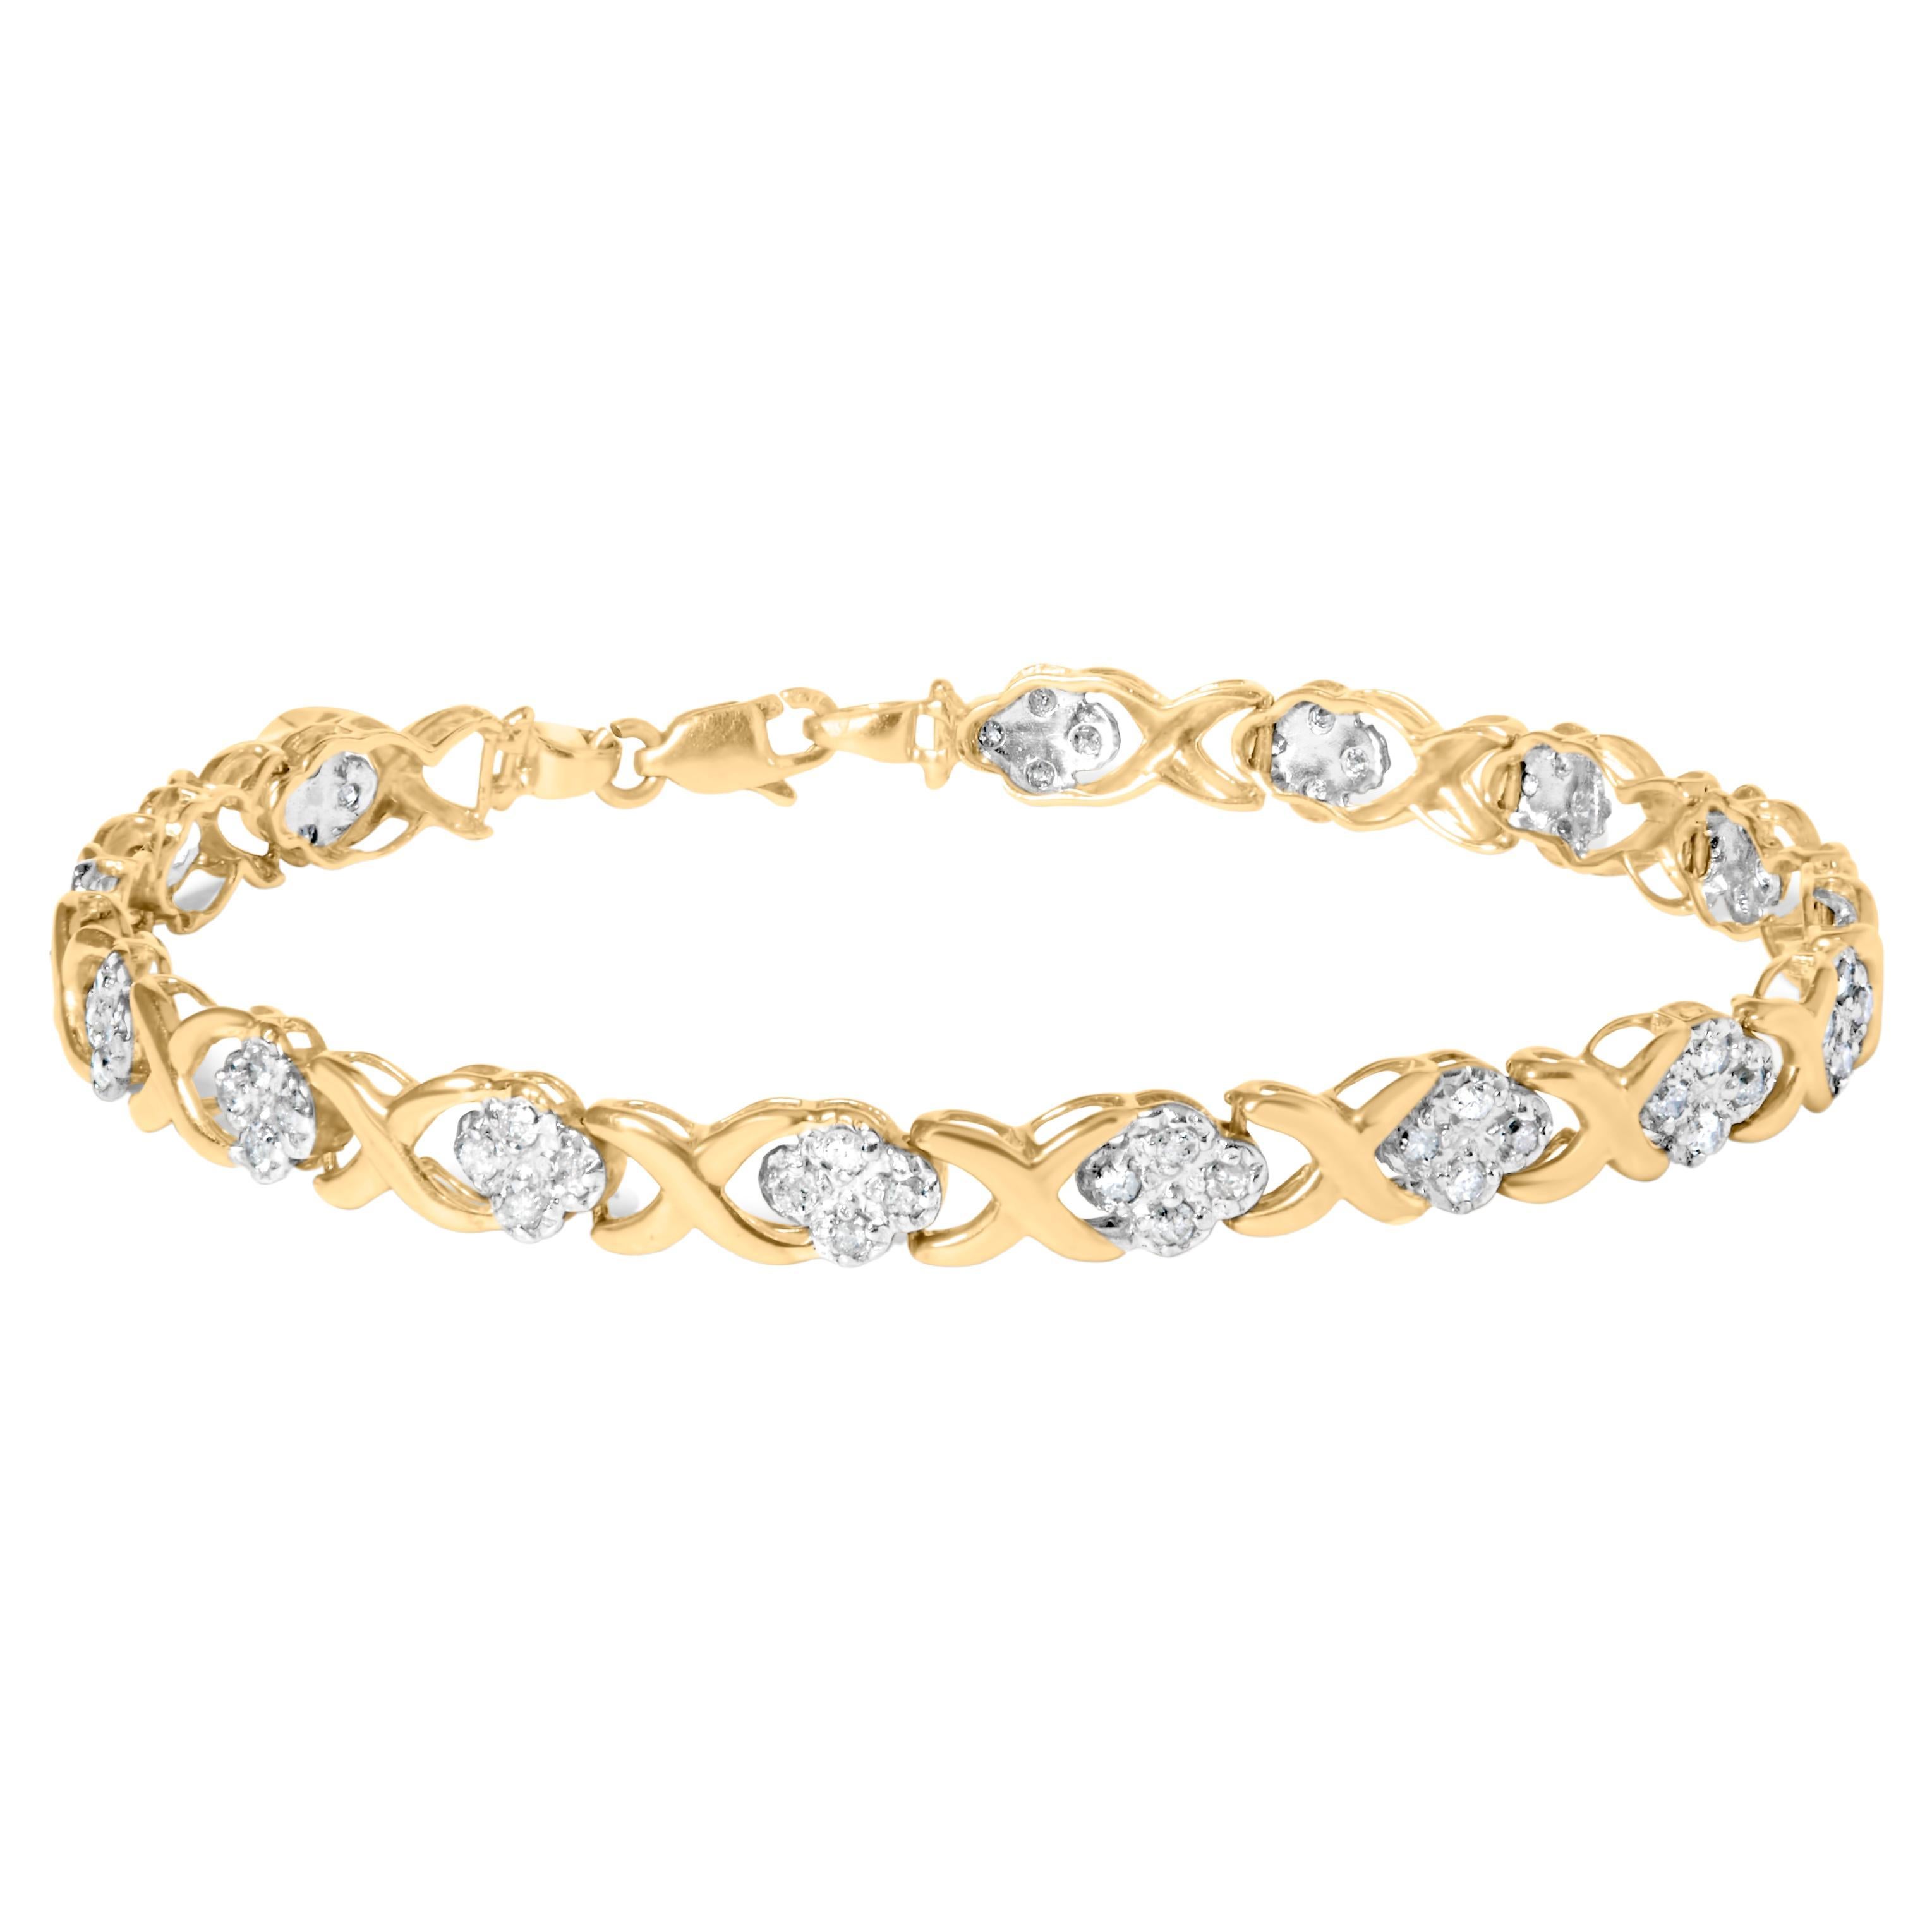 10K Yellow Gold 1.0 Carat Diamond Cluster X Link Tennis Link Bracelet For Sale